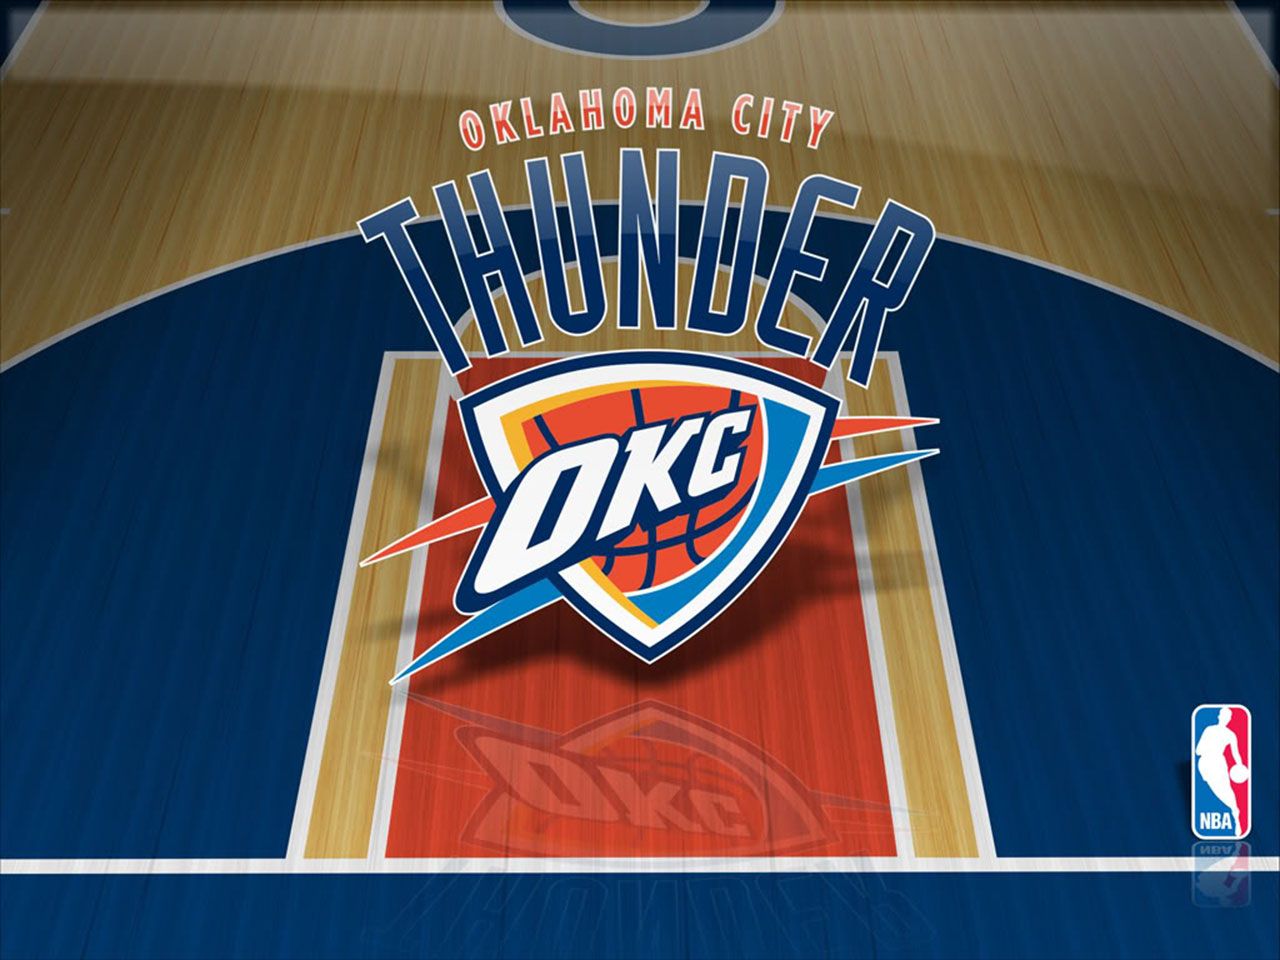 Oklahoma City Thunder Court Wallpaper | Basketball Wallpapers at ...